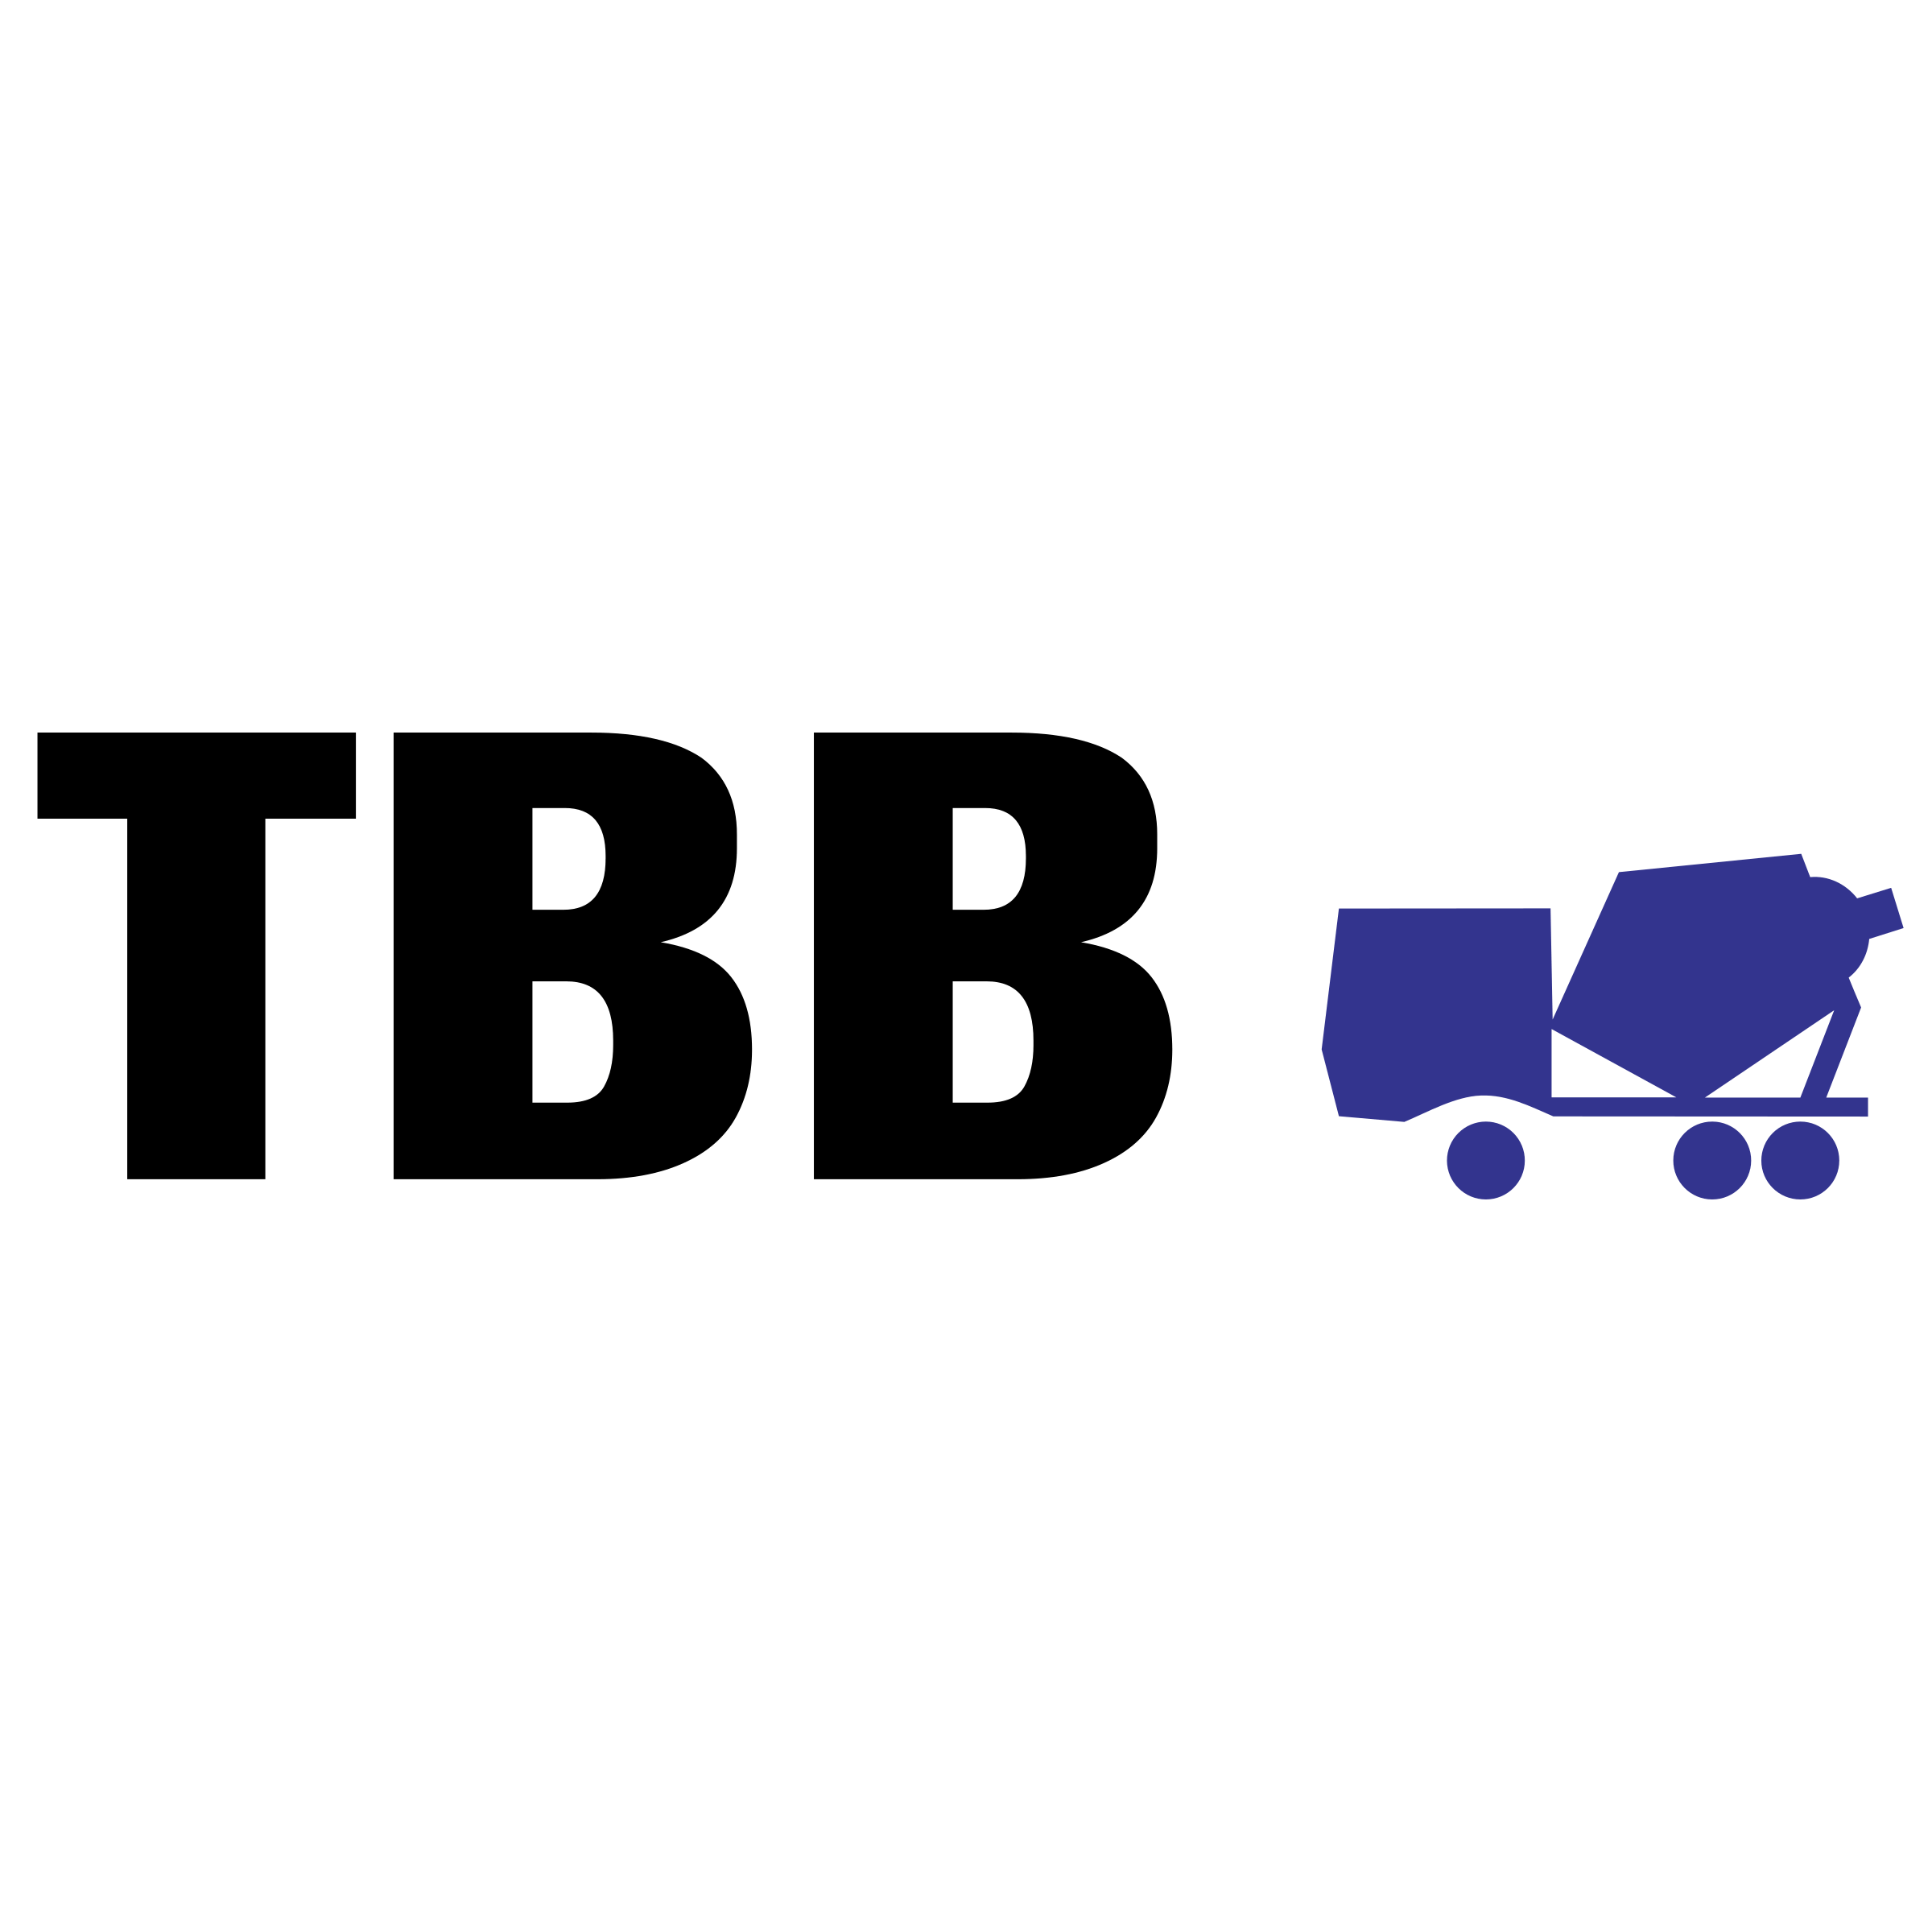 TBB Logo - TBB Logo PNG Transparent & SVG Vector - Freebie Supply